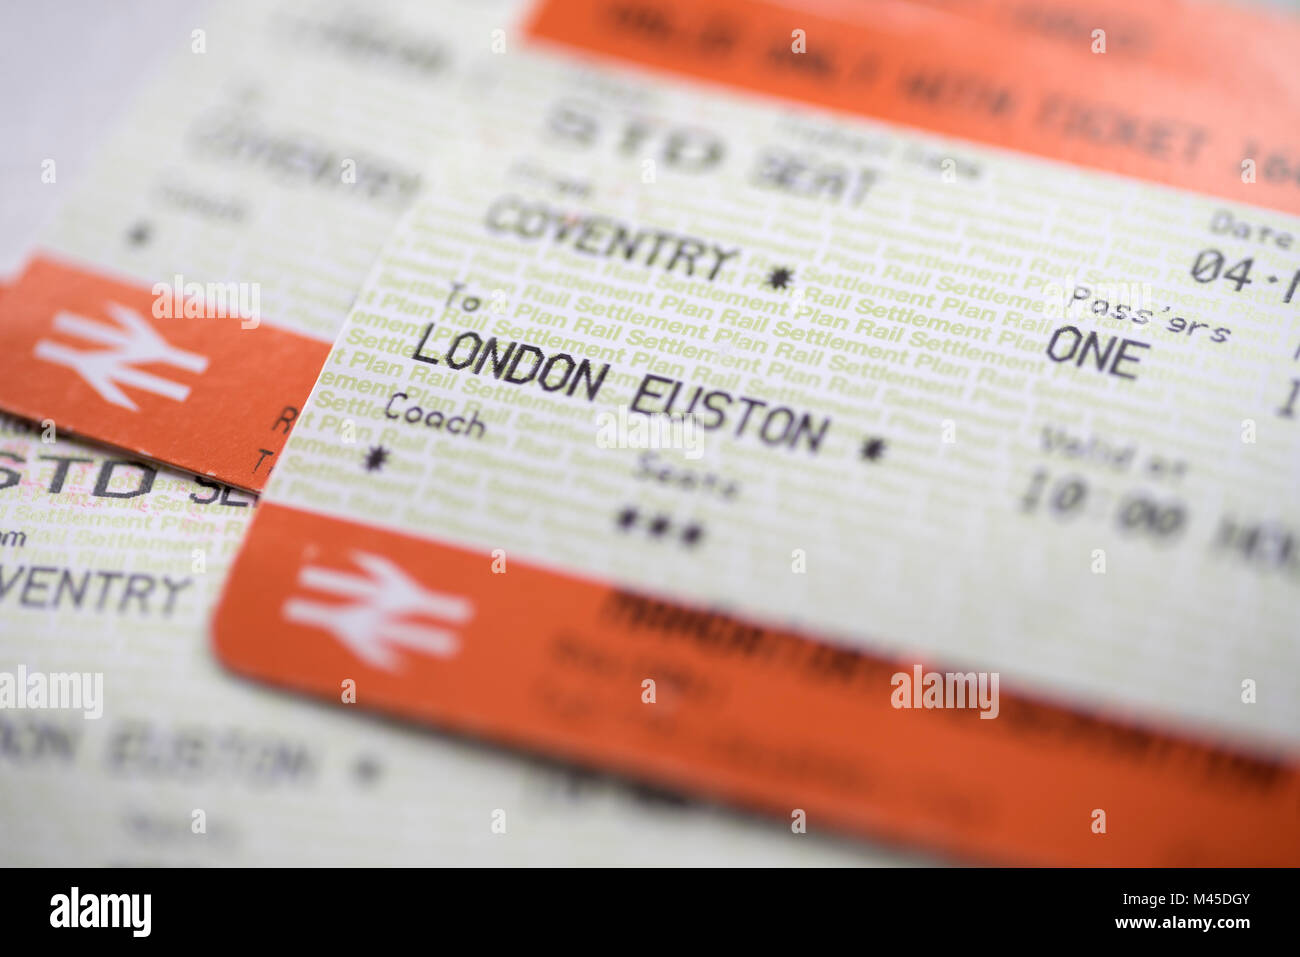 Coventry, London Euston Railway ticket Stockfoto